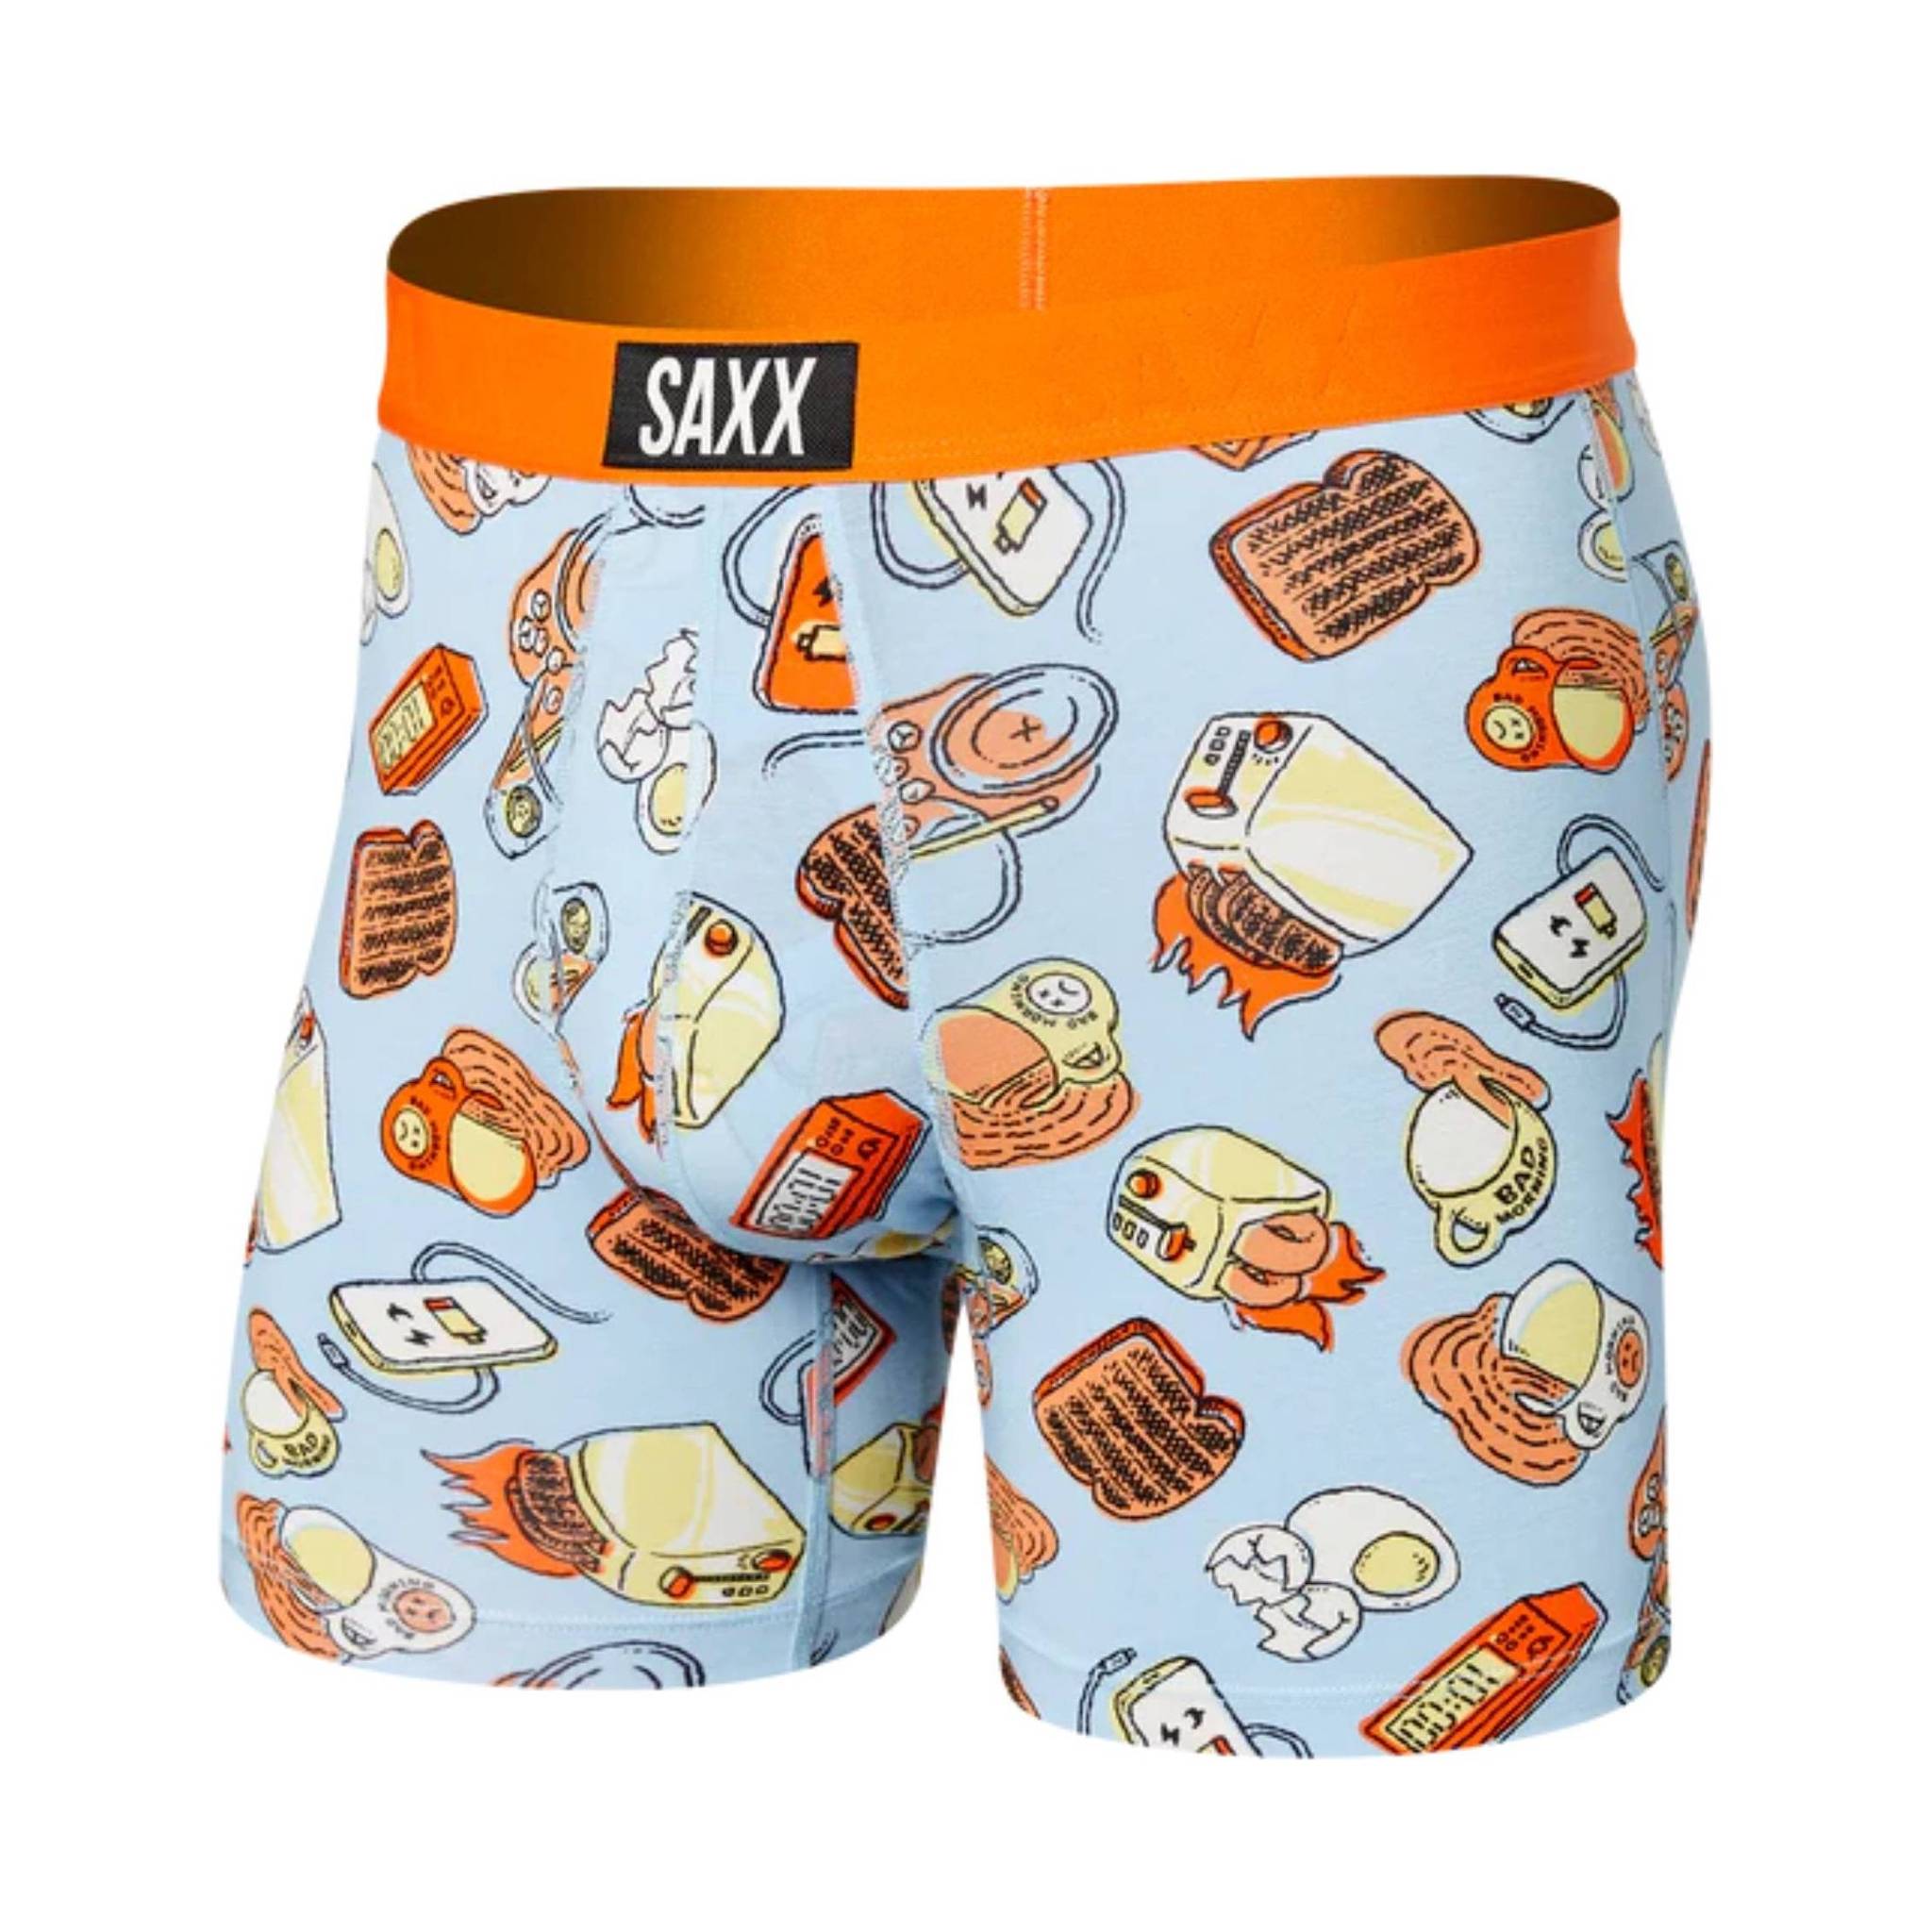 SAXX Underwear Men's Vibe Boxer Brief with BallPark Pouch